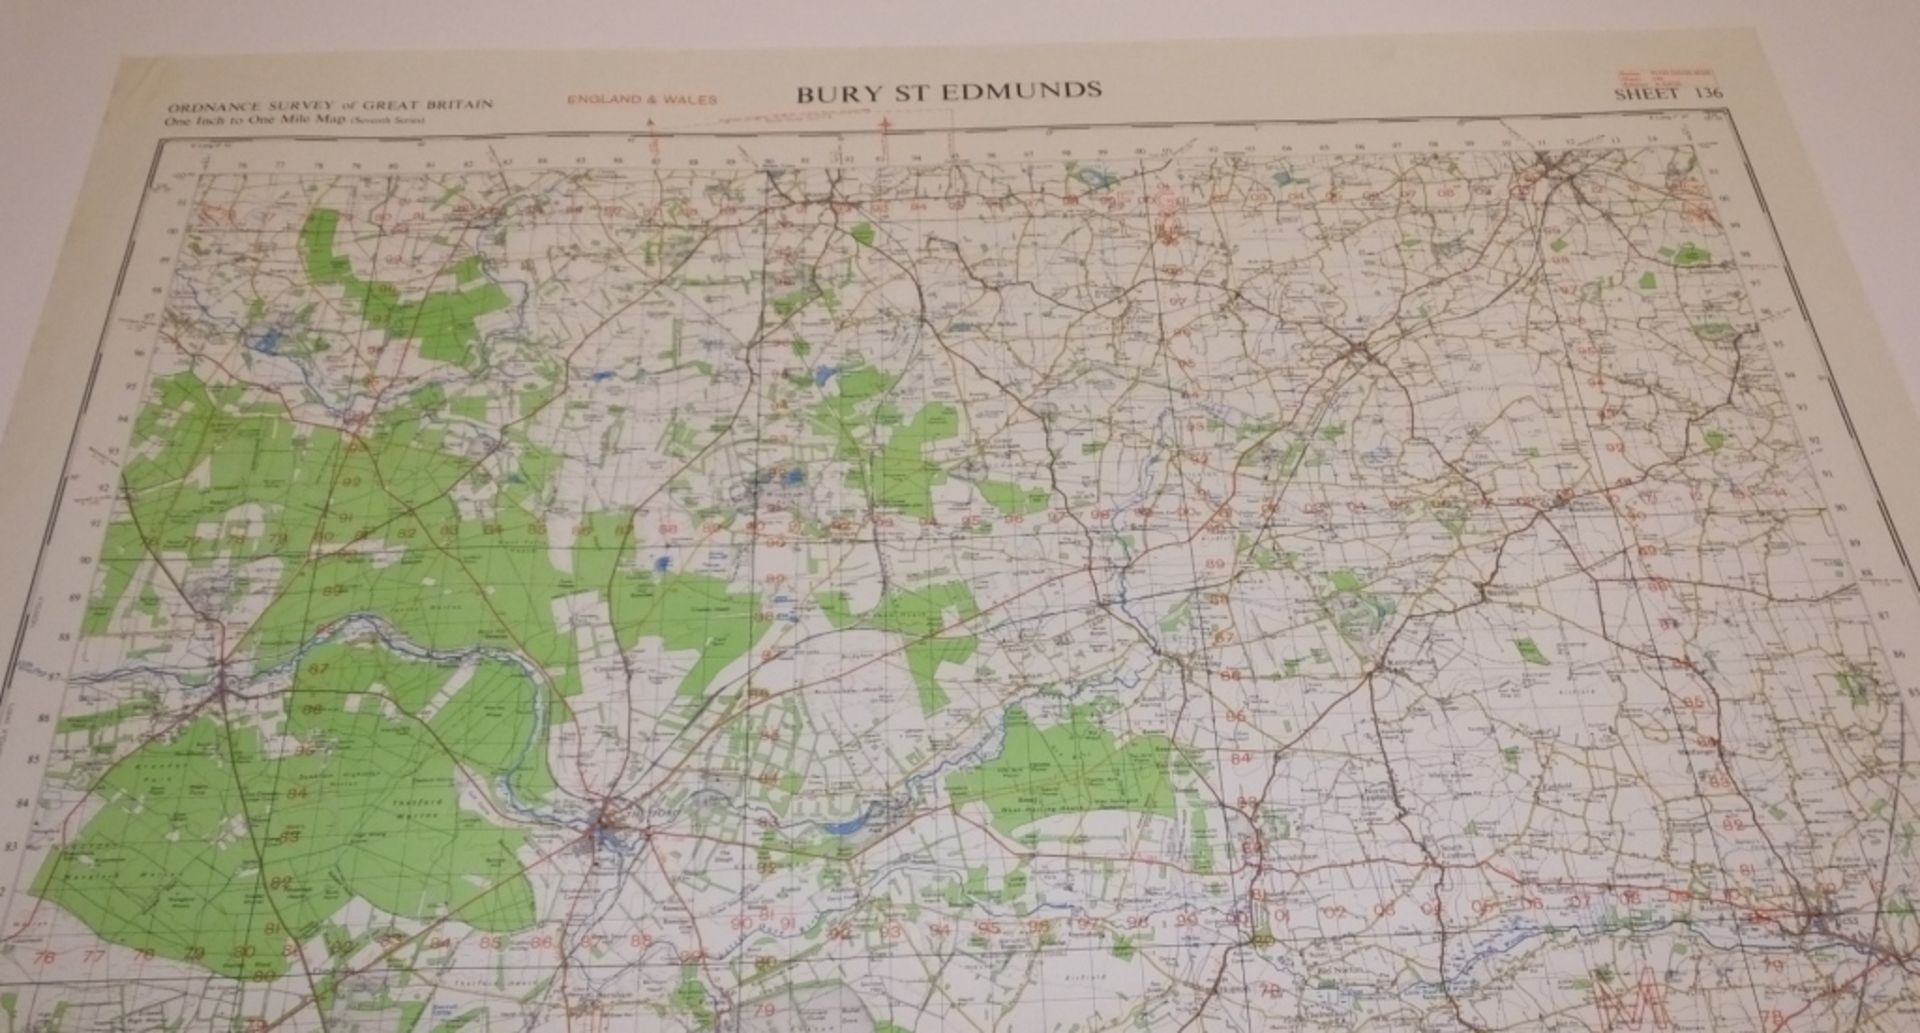 21x ENGLAND & WALES MAP BURY ST EDMONDS 1INCH 1MILE 1958 7TH SERIES 4GSGS SHEET 136 - Bild 2 aus 5